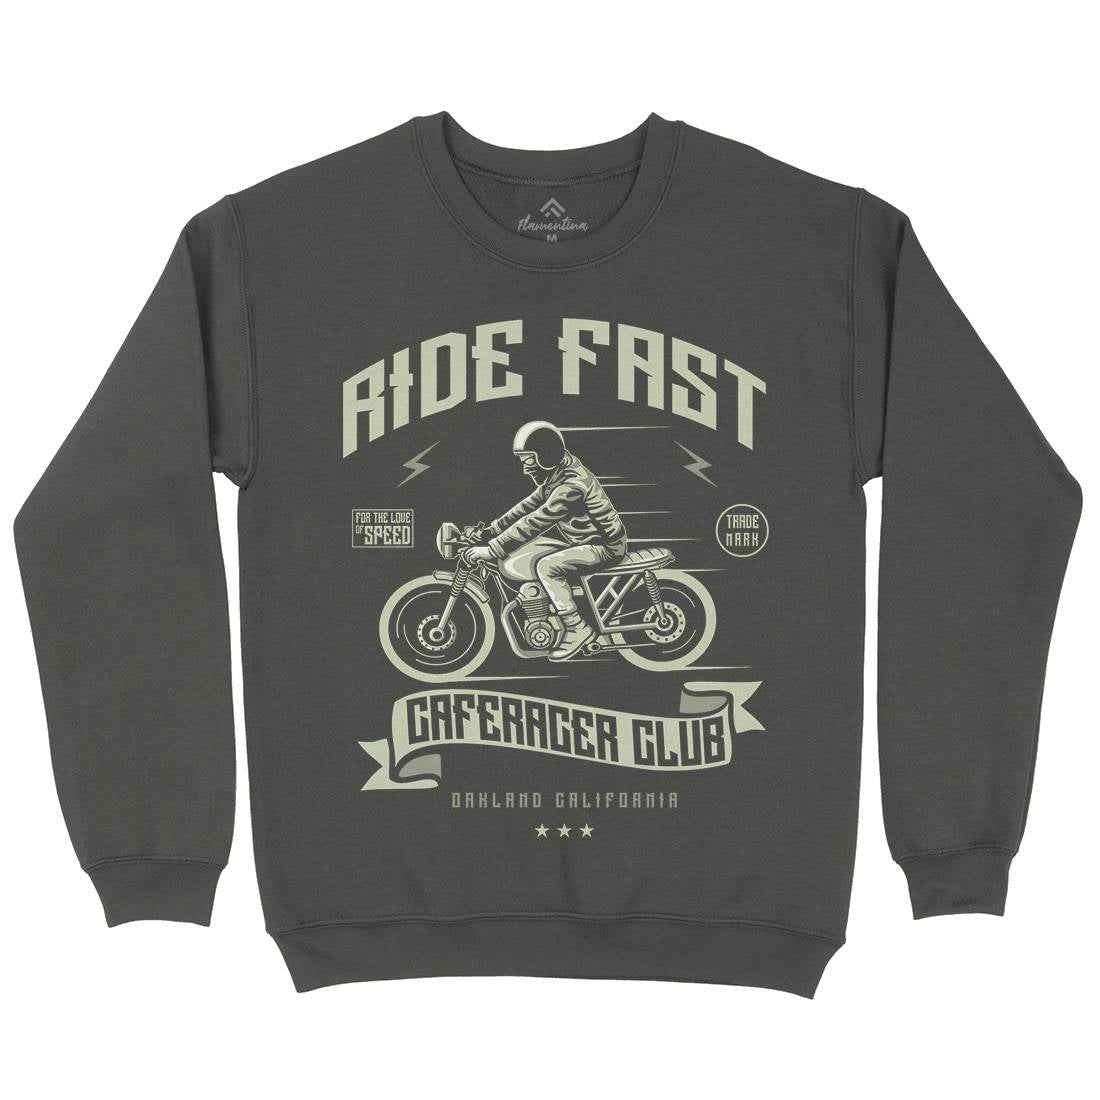 Ride Fast Mens Crew Neck Sweatshirt Motorcycles A117